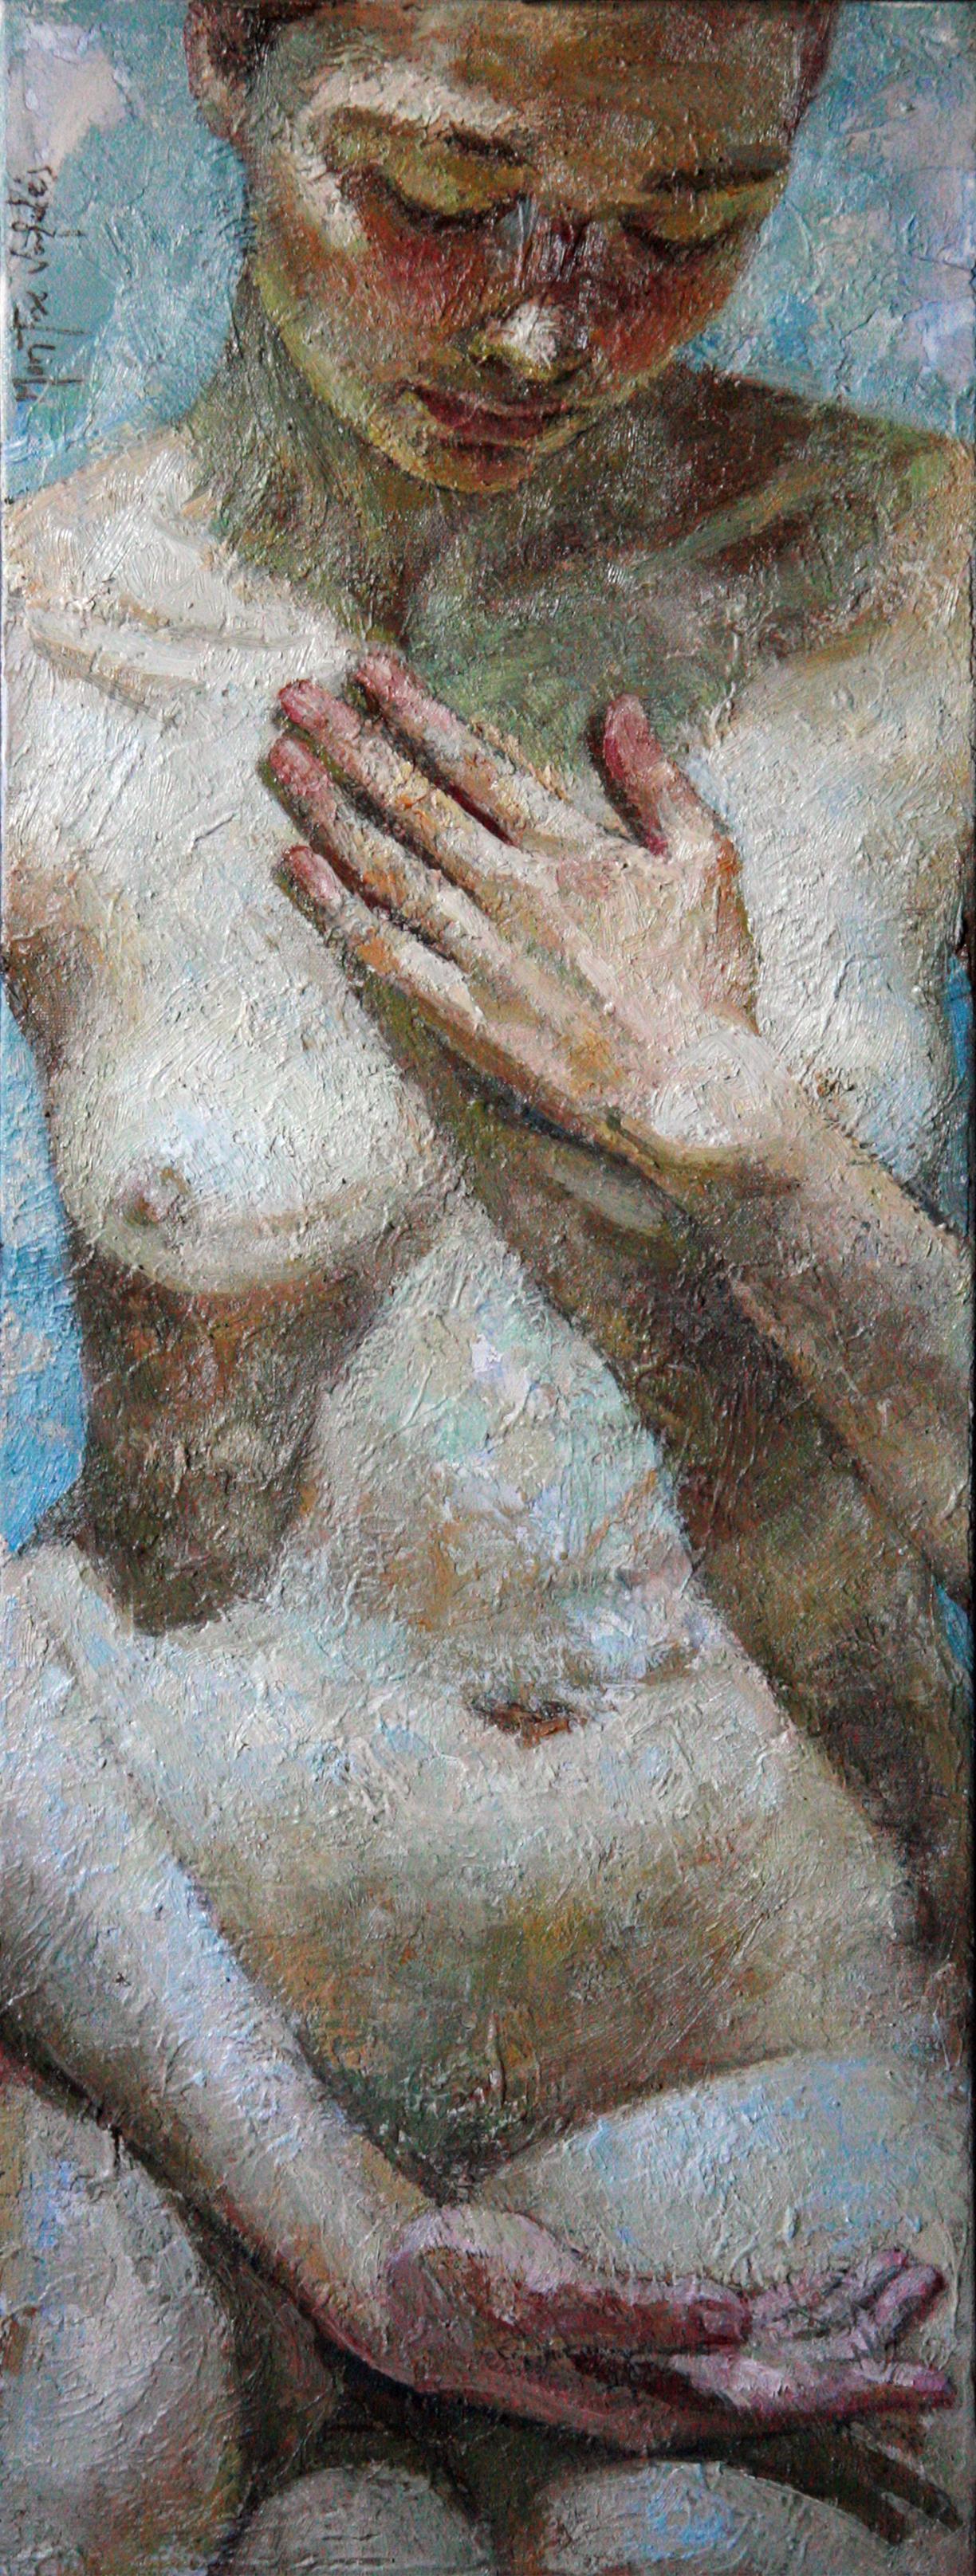 Montse Valdés Portrait Painting - 8-7-11 - 21st Century, Contemporary, Nude Painting, Oil on Canvas